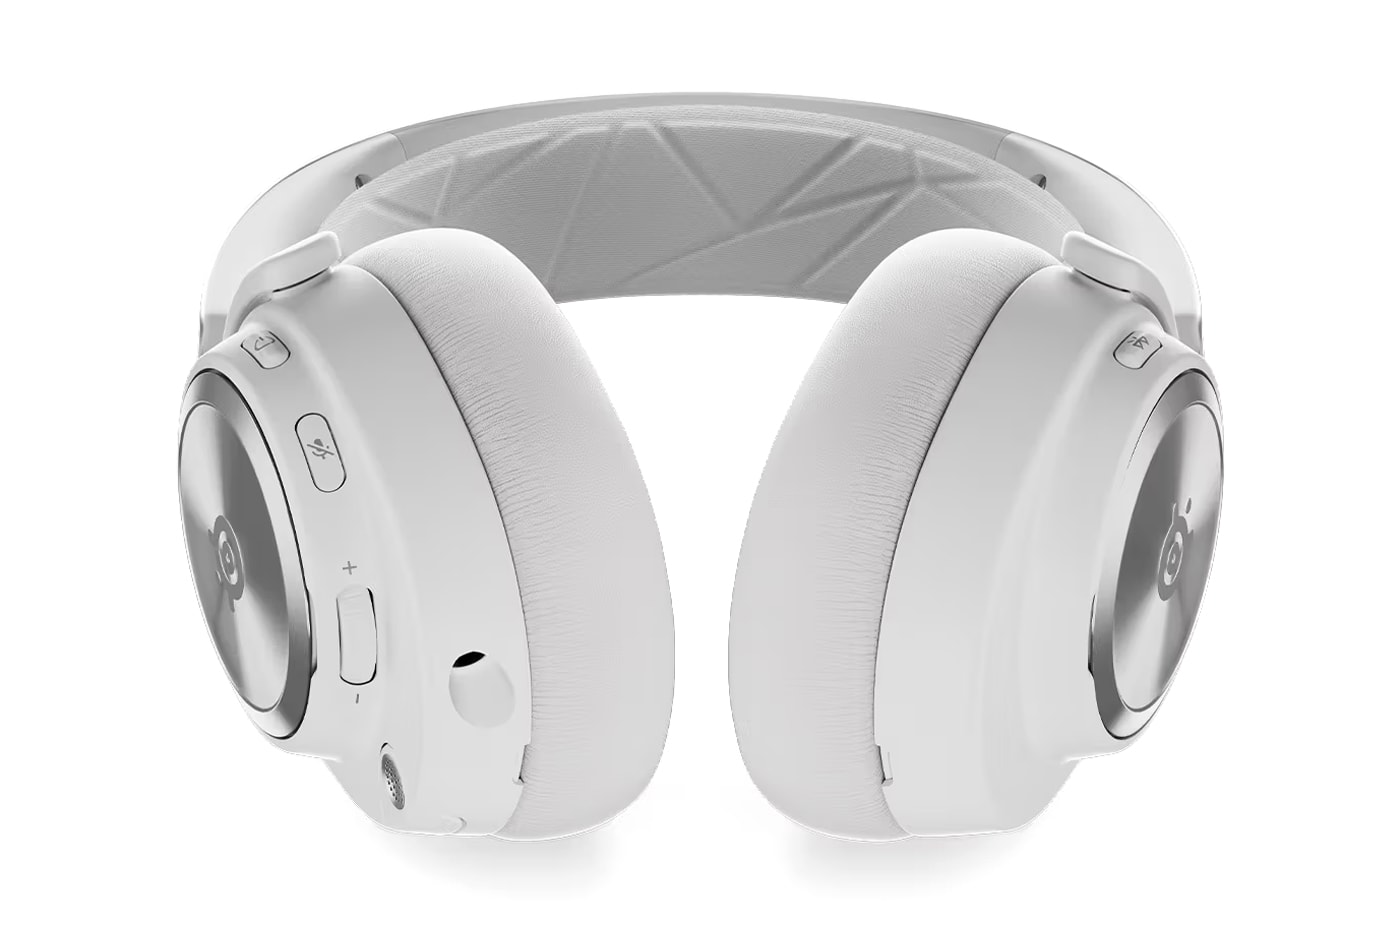 SteelSeries Launches Sleek White and Silver Version of its Popular Award Winning Arctis Nova Pro Wireless Headphones 